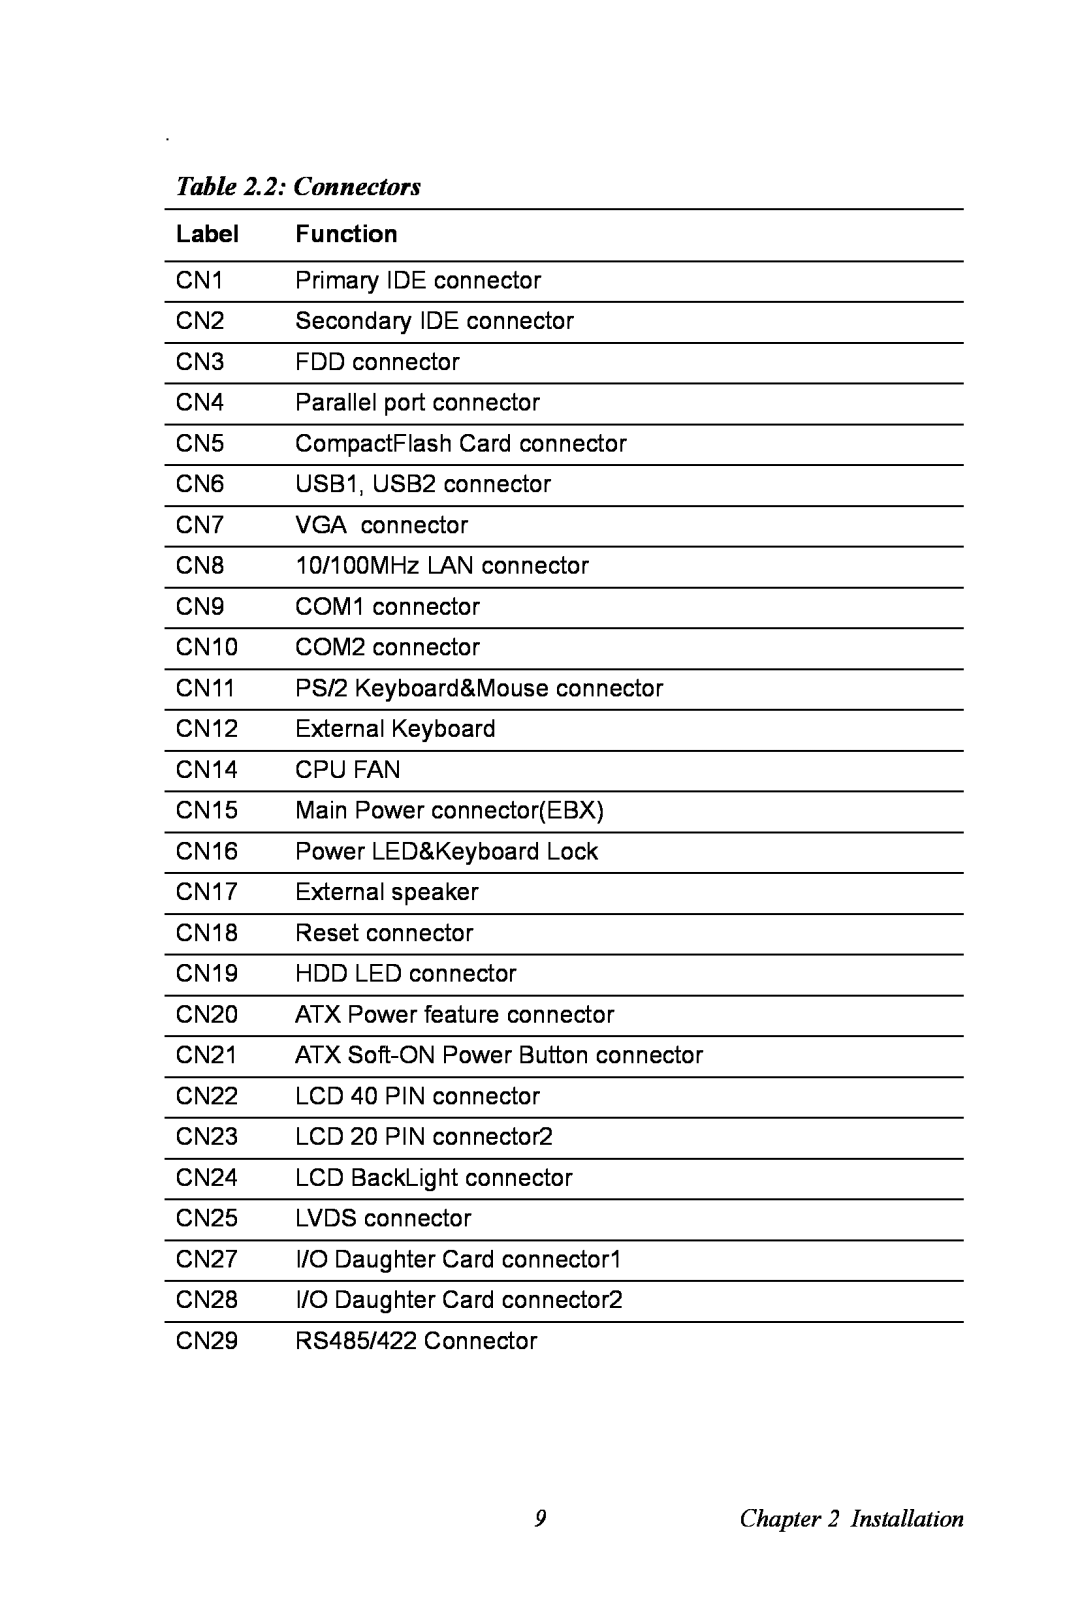 Advantech PCI-6872 user manual 2 Connectors, Label, Function, Installation 